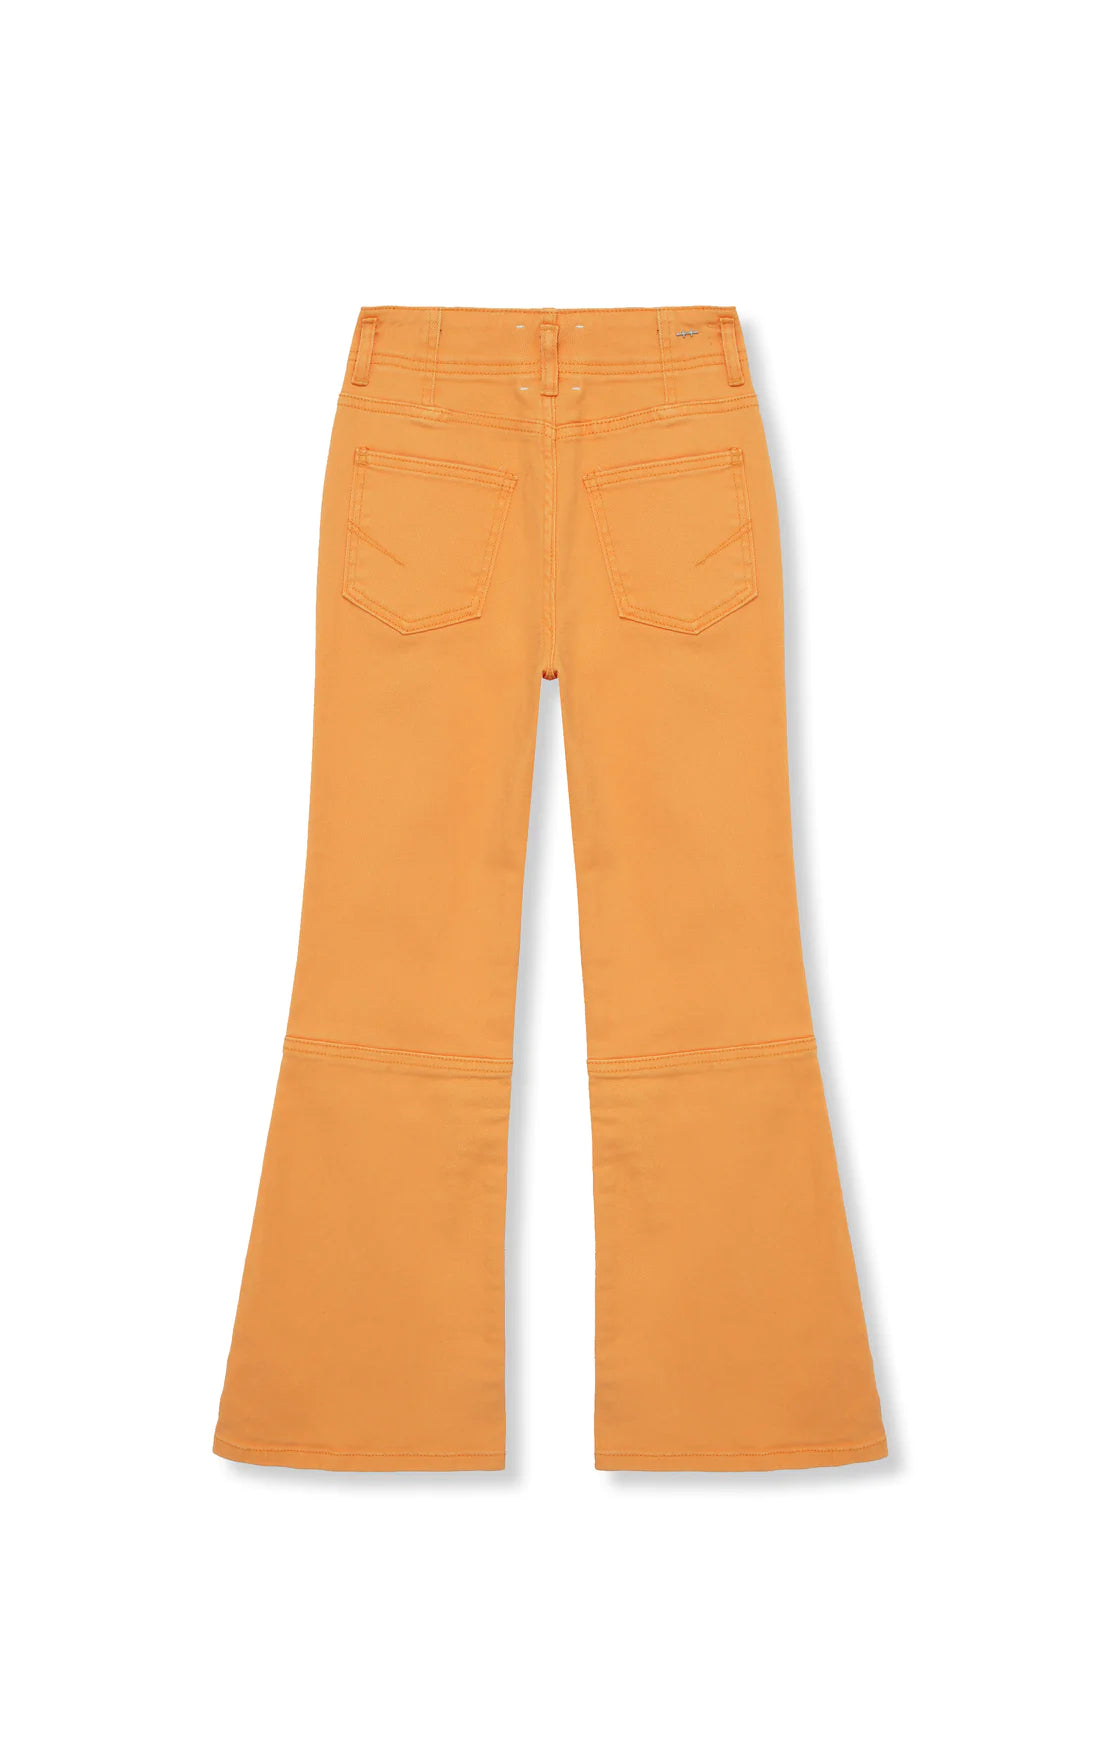 Orange Flare Pants